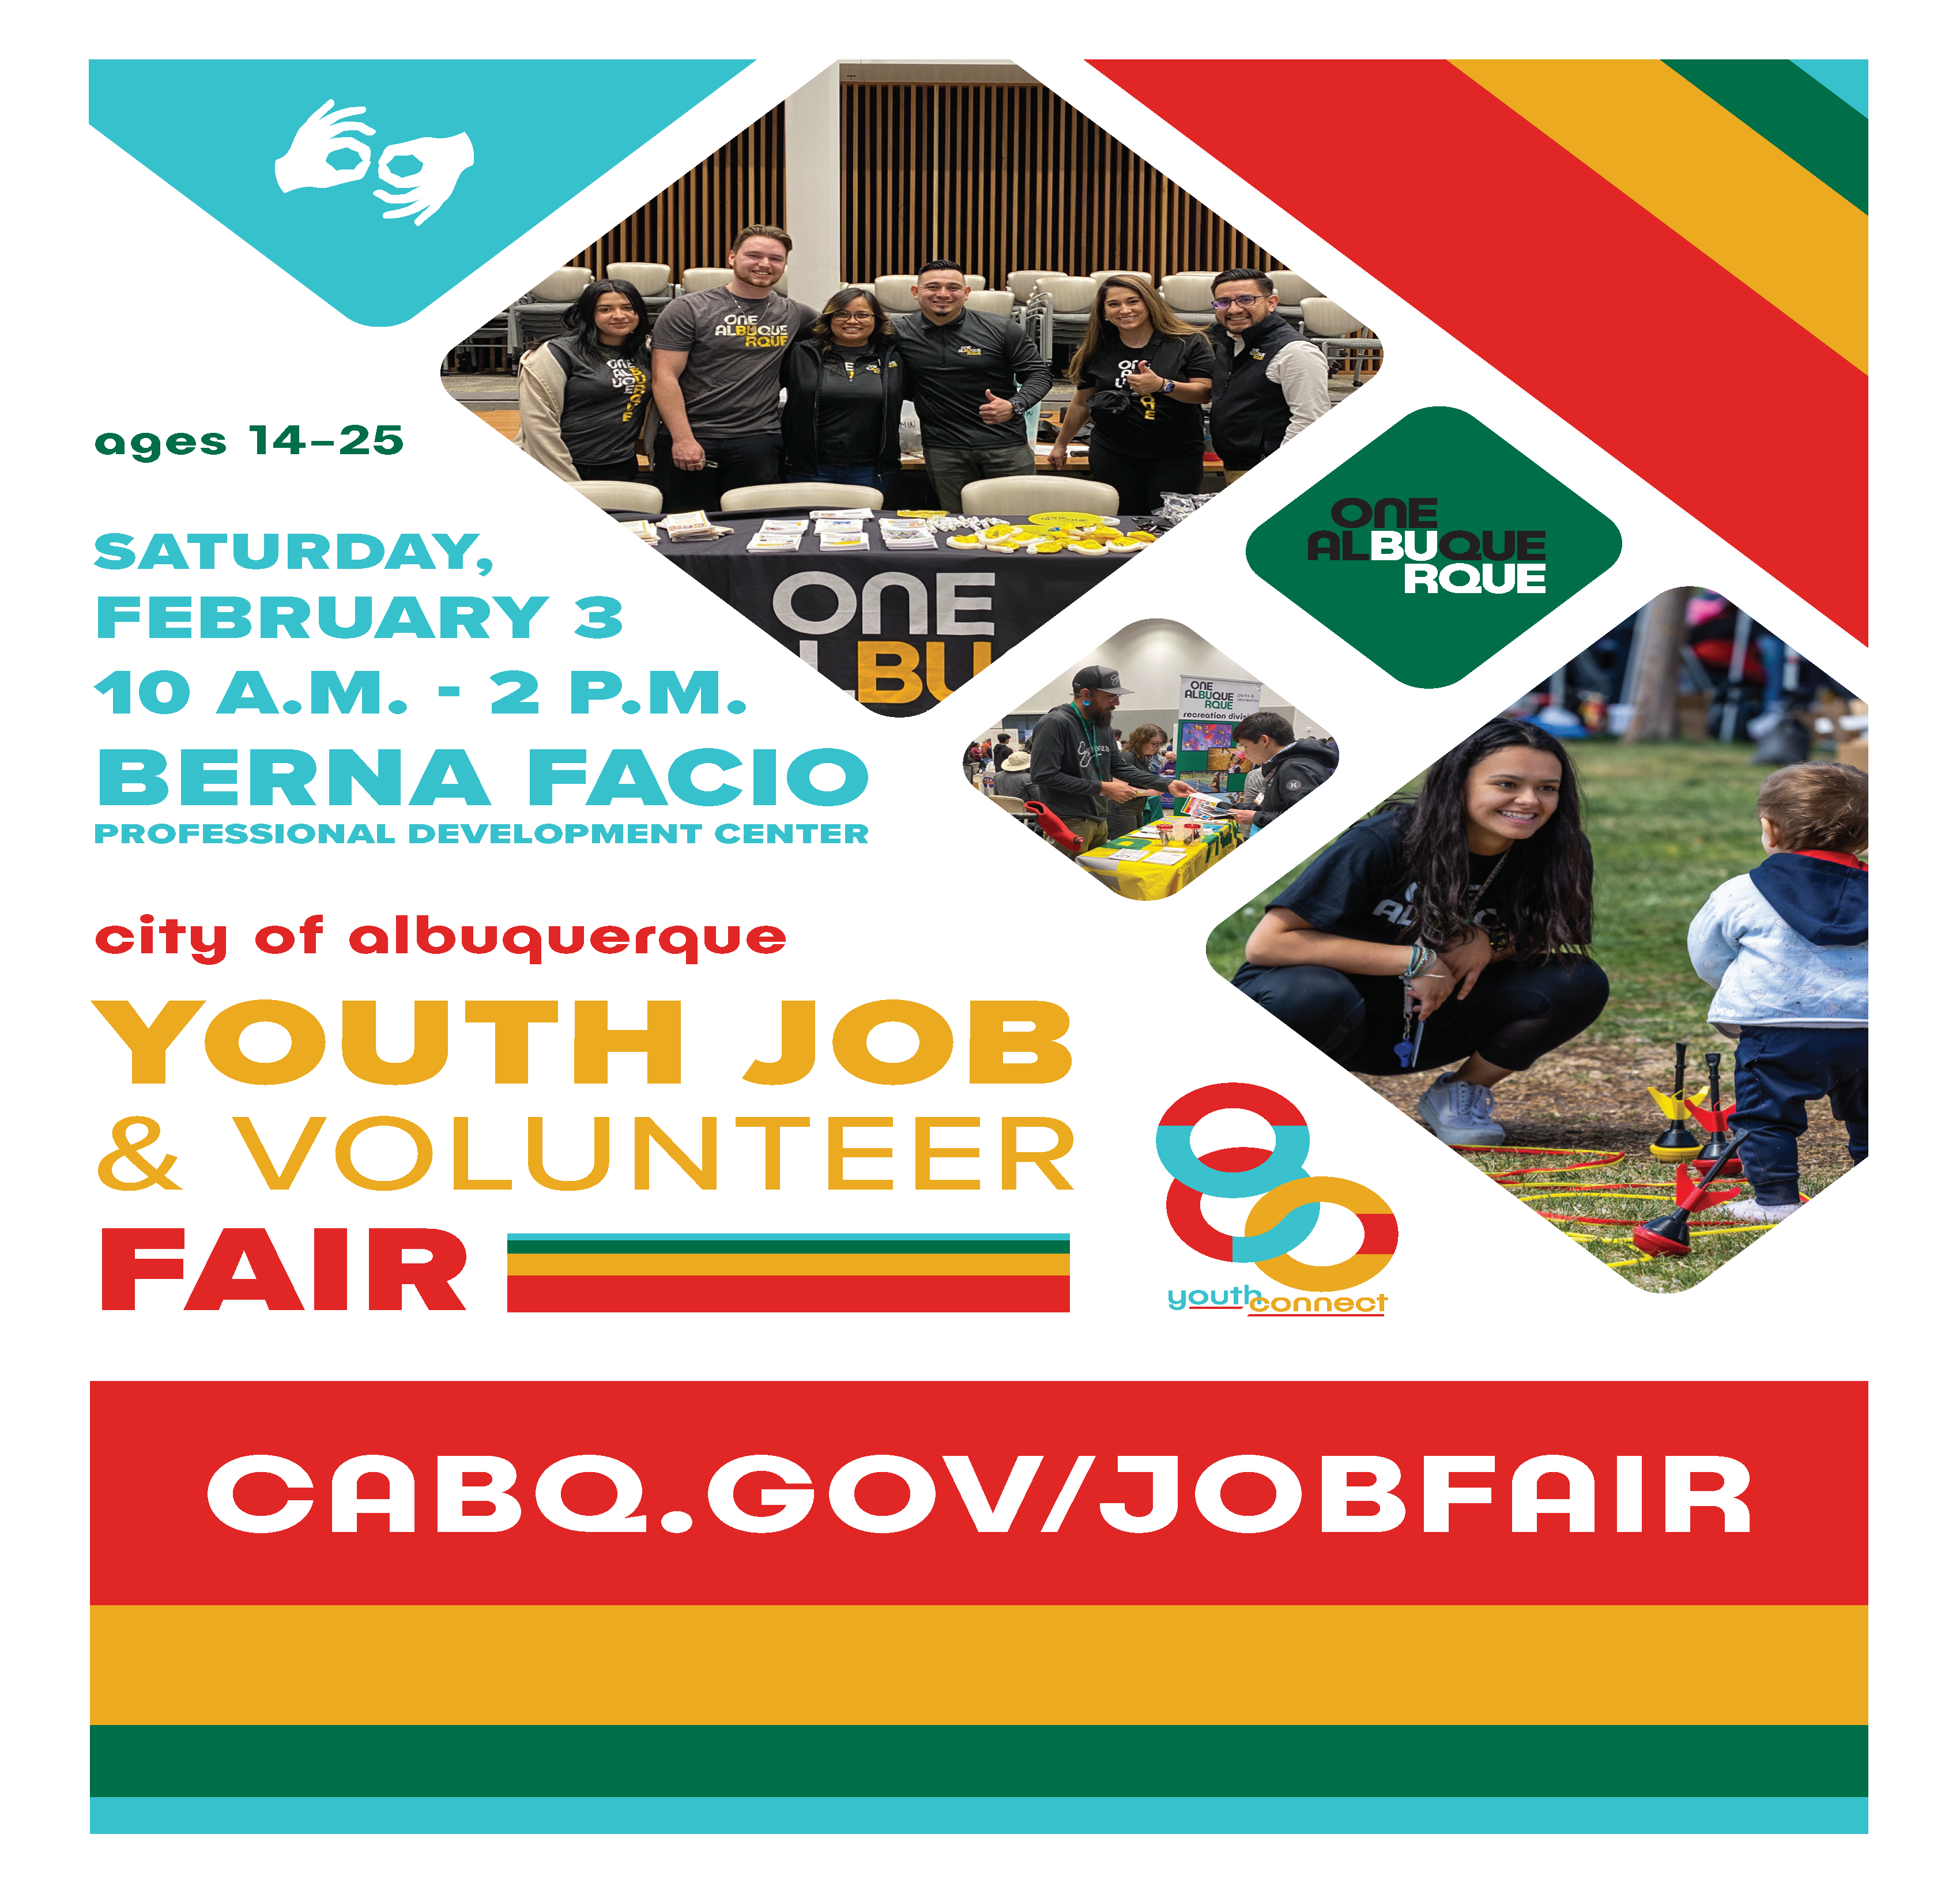 City of Albuquerque Youth Job & Volunteer Fair flyer